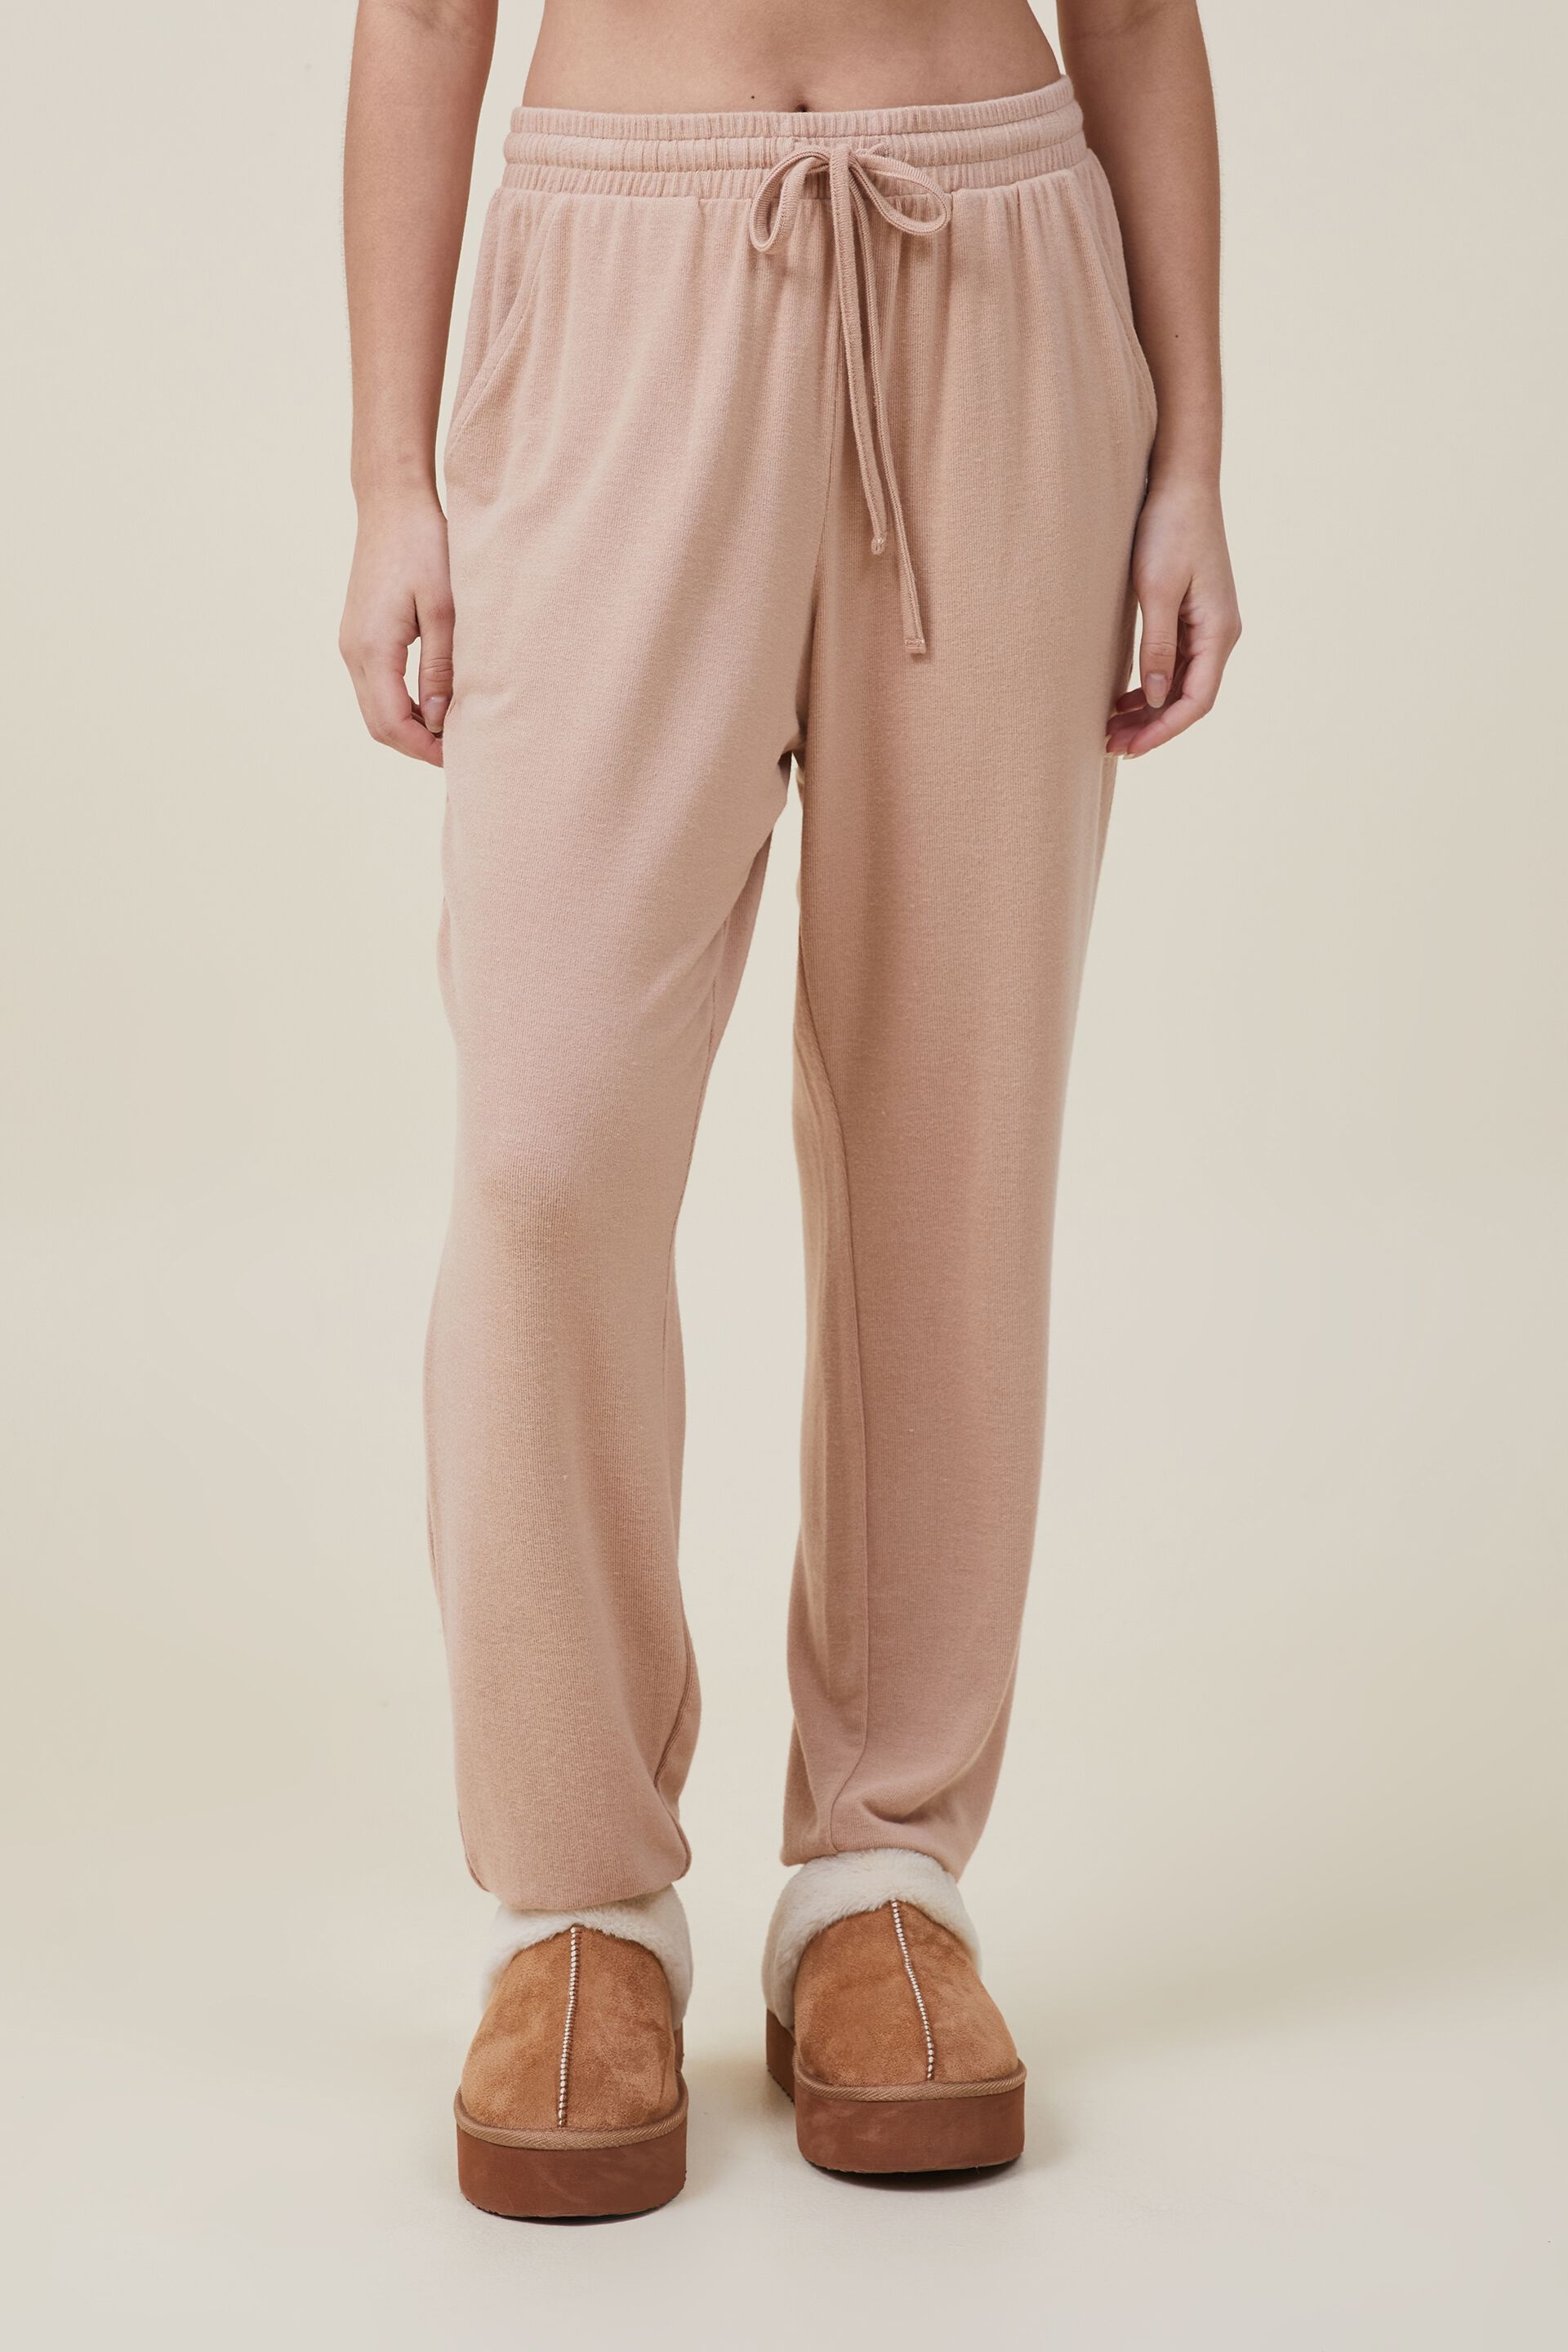 Kiara Super Soft Top and Slit Pants Set – LeiMarie Limited